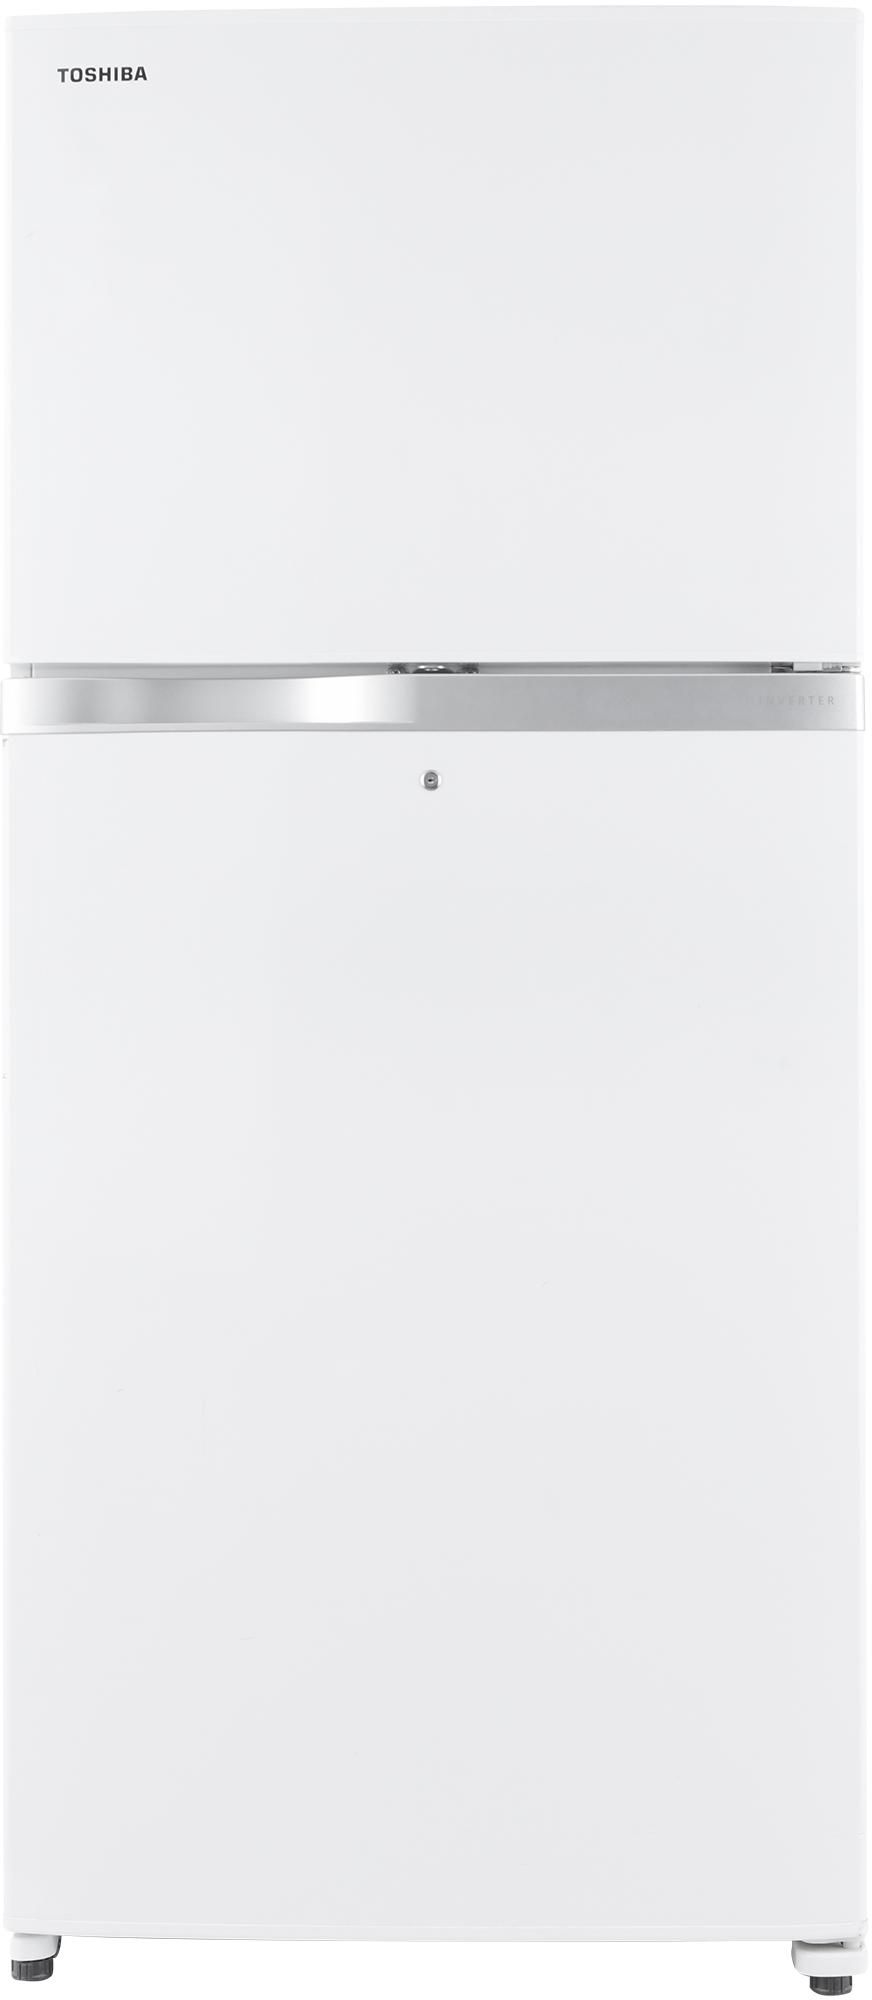 Toshiba Refrigerator,15.7Cuft, Freezer 5.8Cu.ft, Inverter, White Color